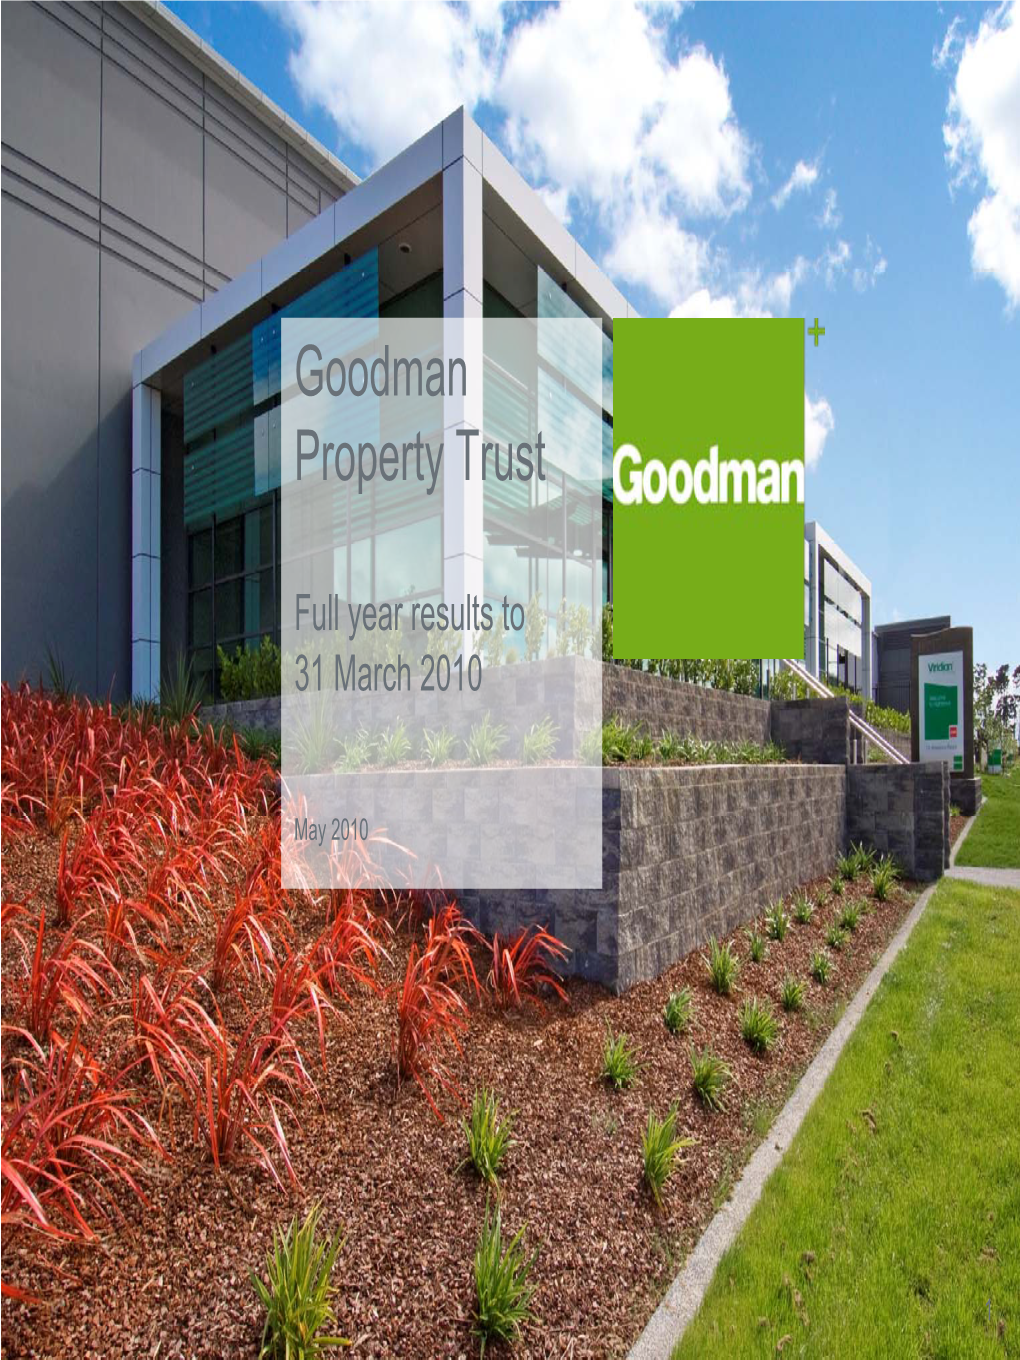 Goodman Property Trust